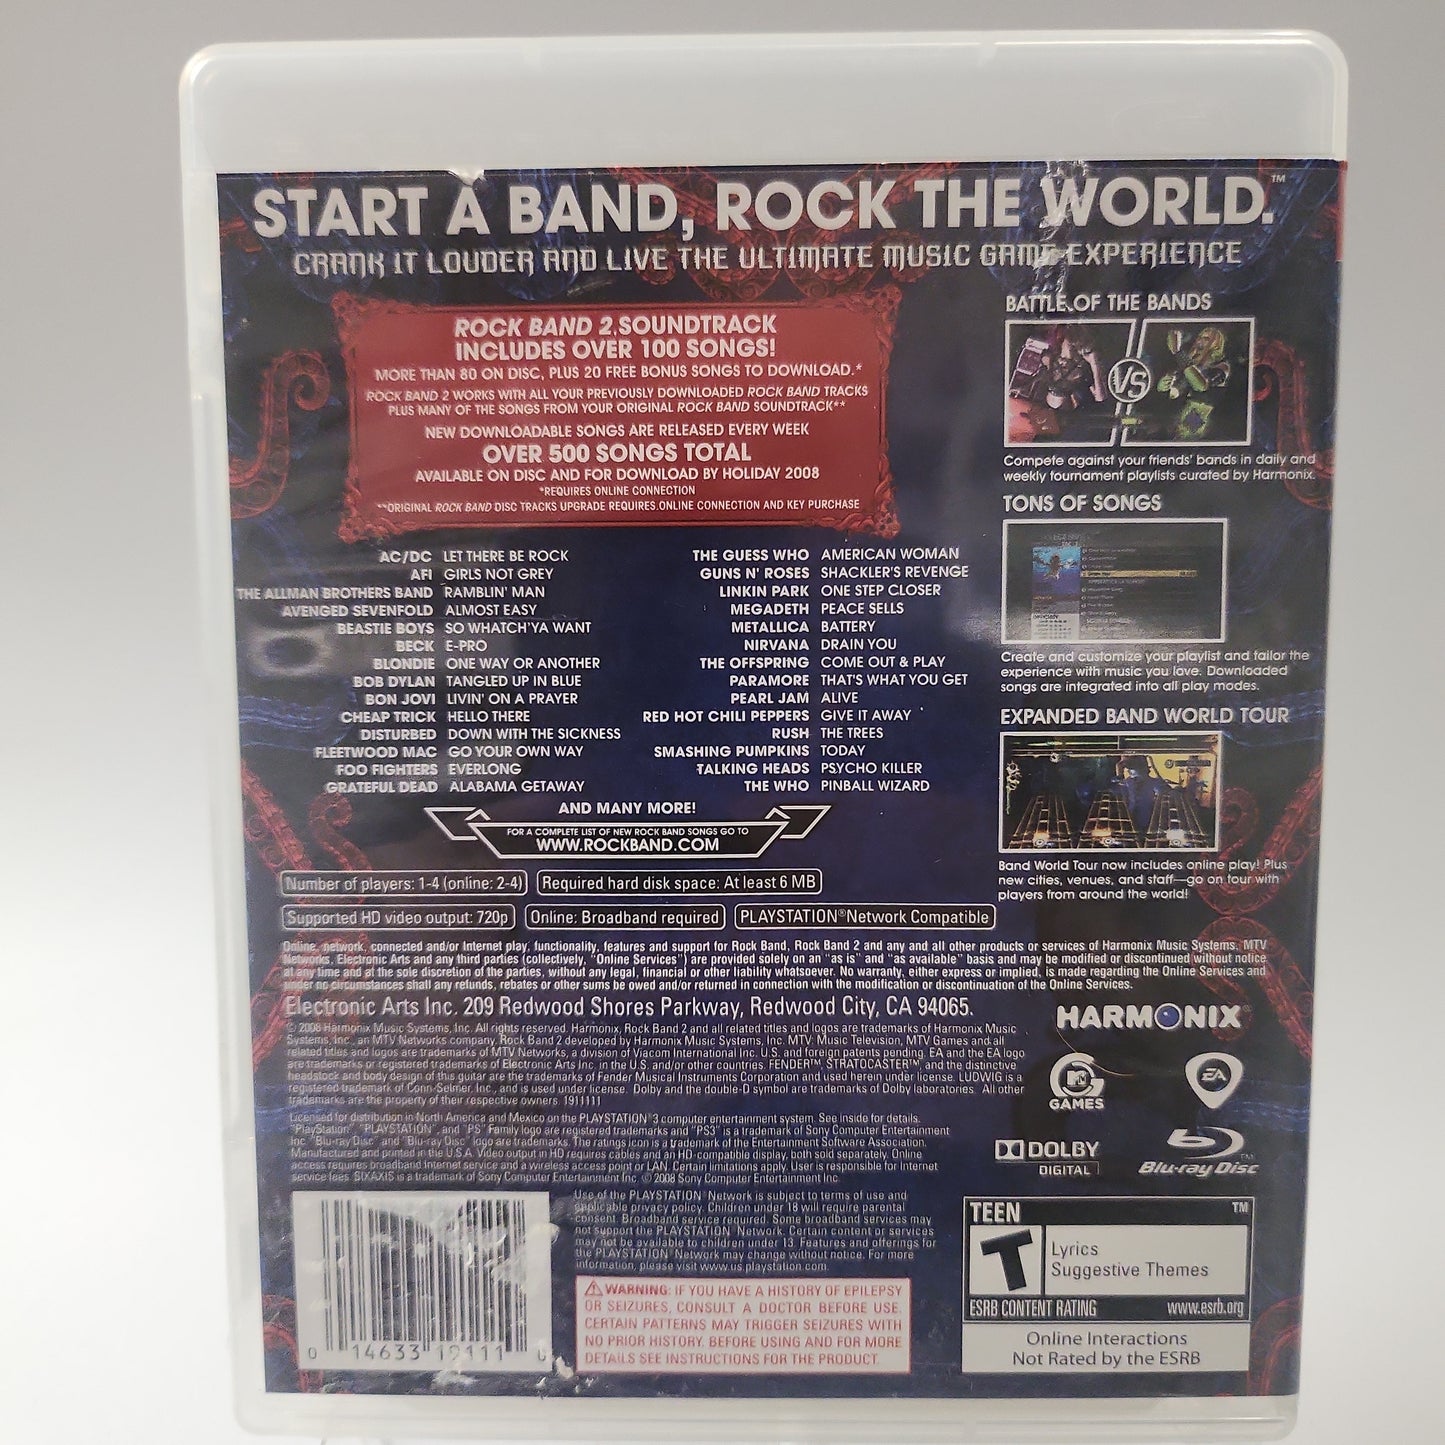 Rockband 2 American Cover Playstation 3